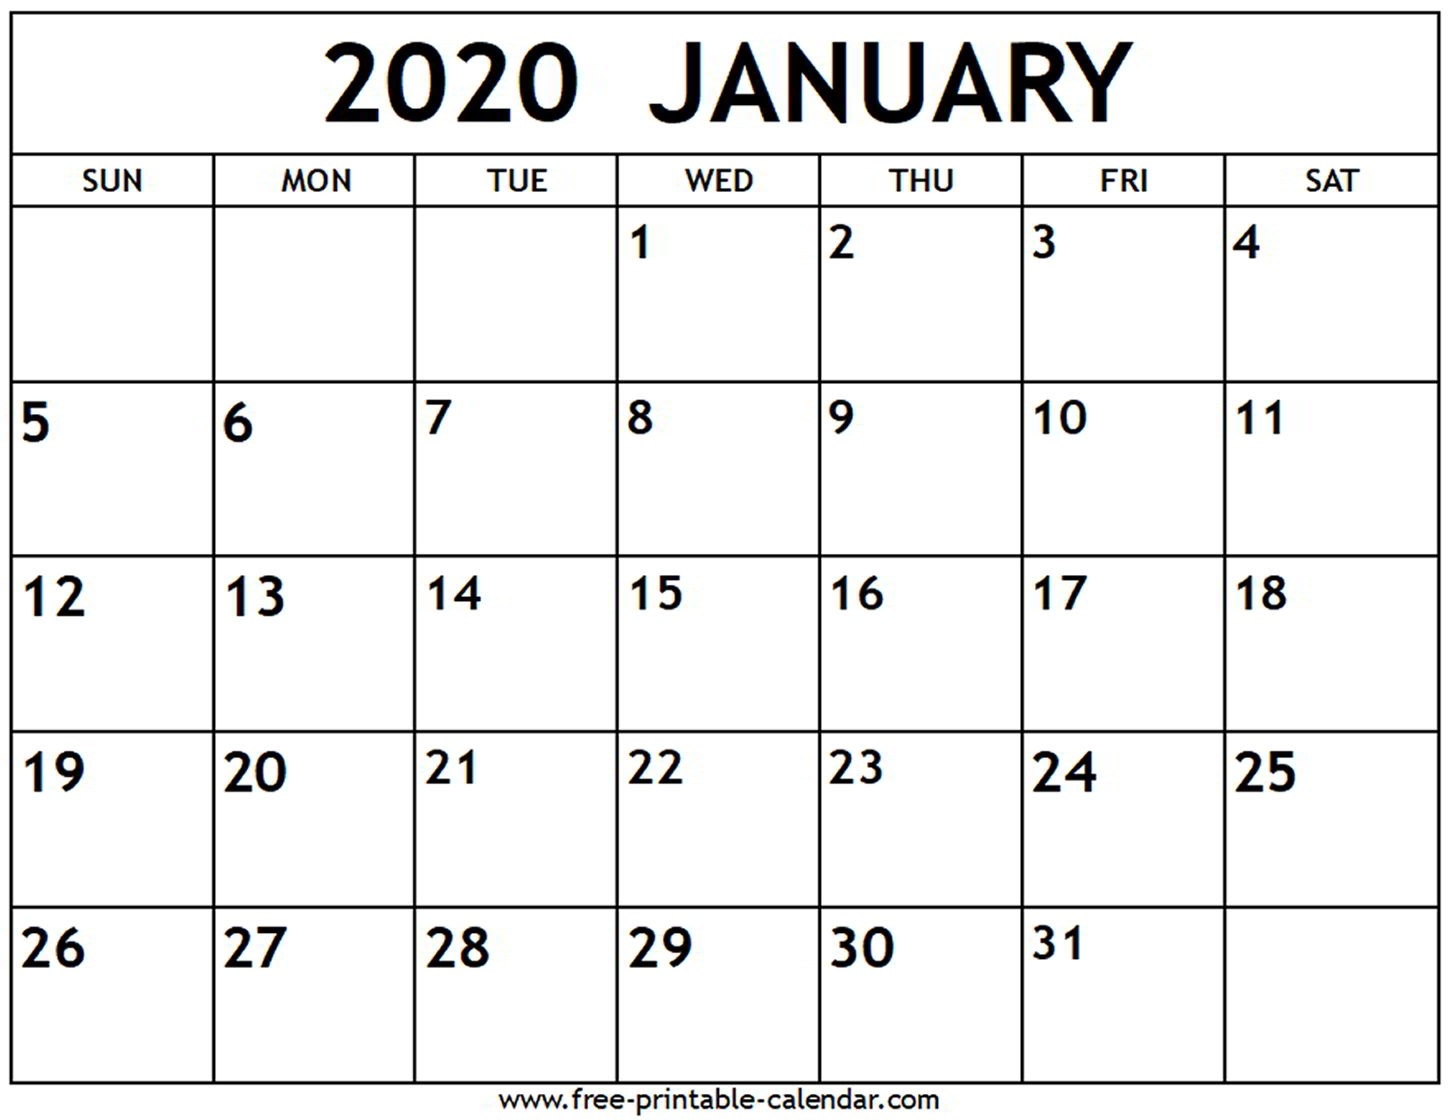 January 2020 Calendar - Free-Printable-Calendar-January 2020 Calendar Print